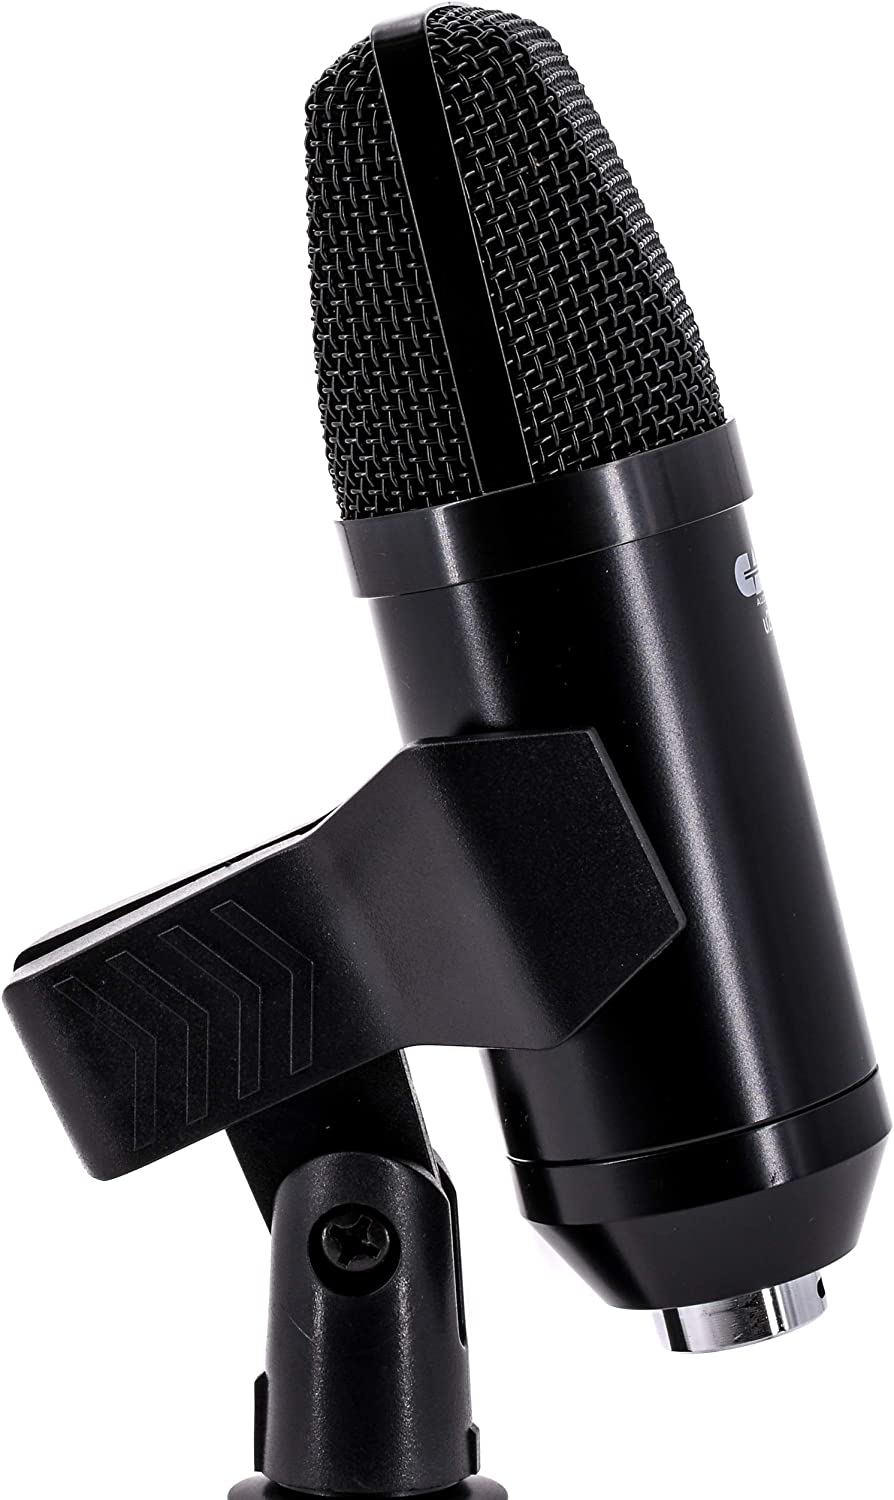 CAD Audio U49 USB Large Format Side Address Studio Microphone with Headphone Monitor and Echo